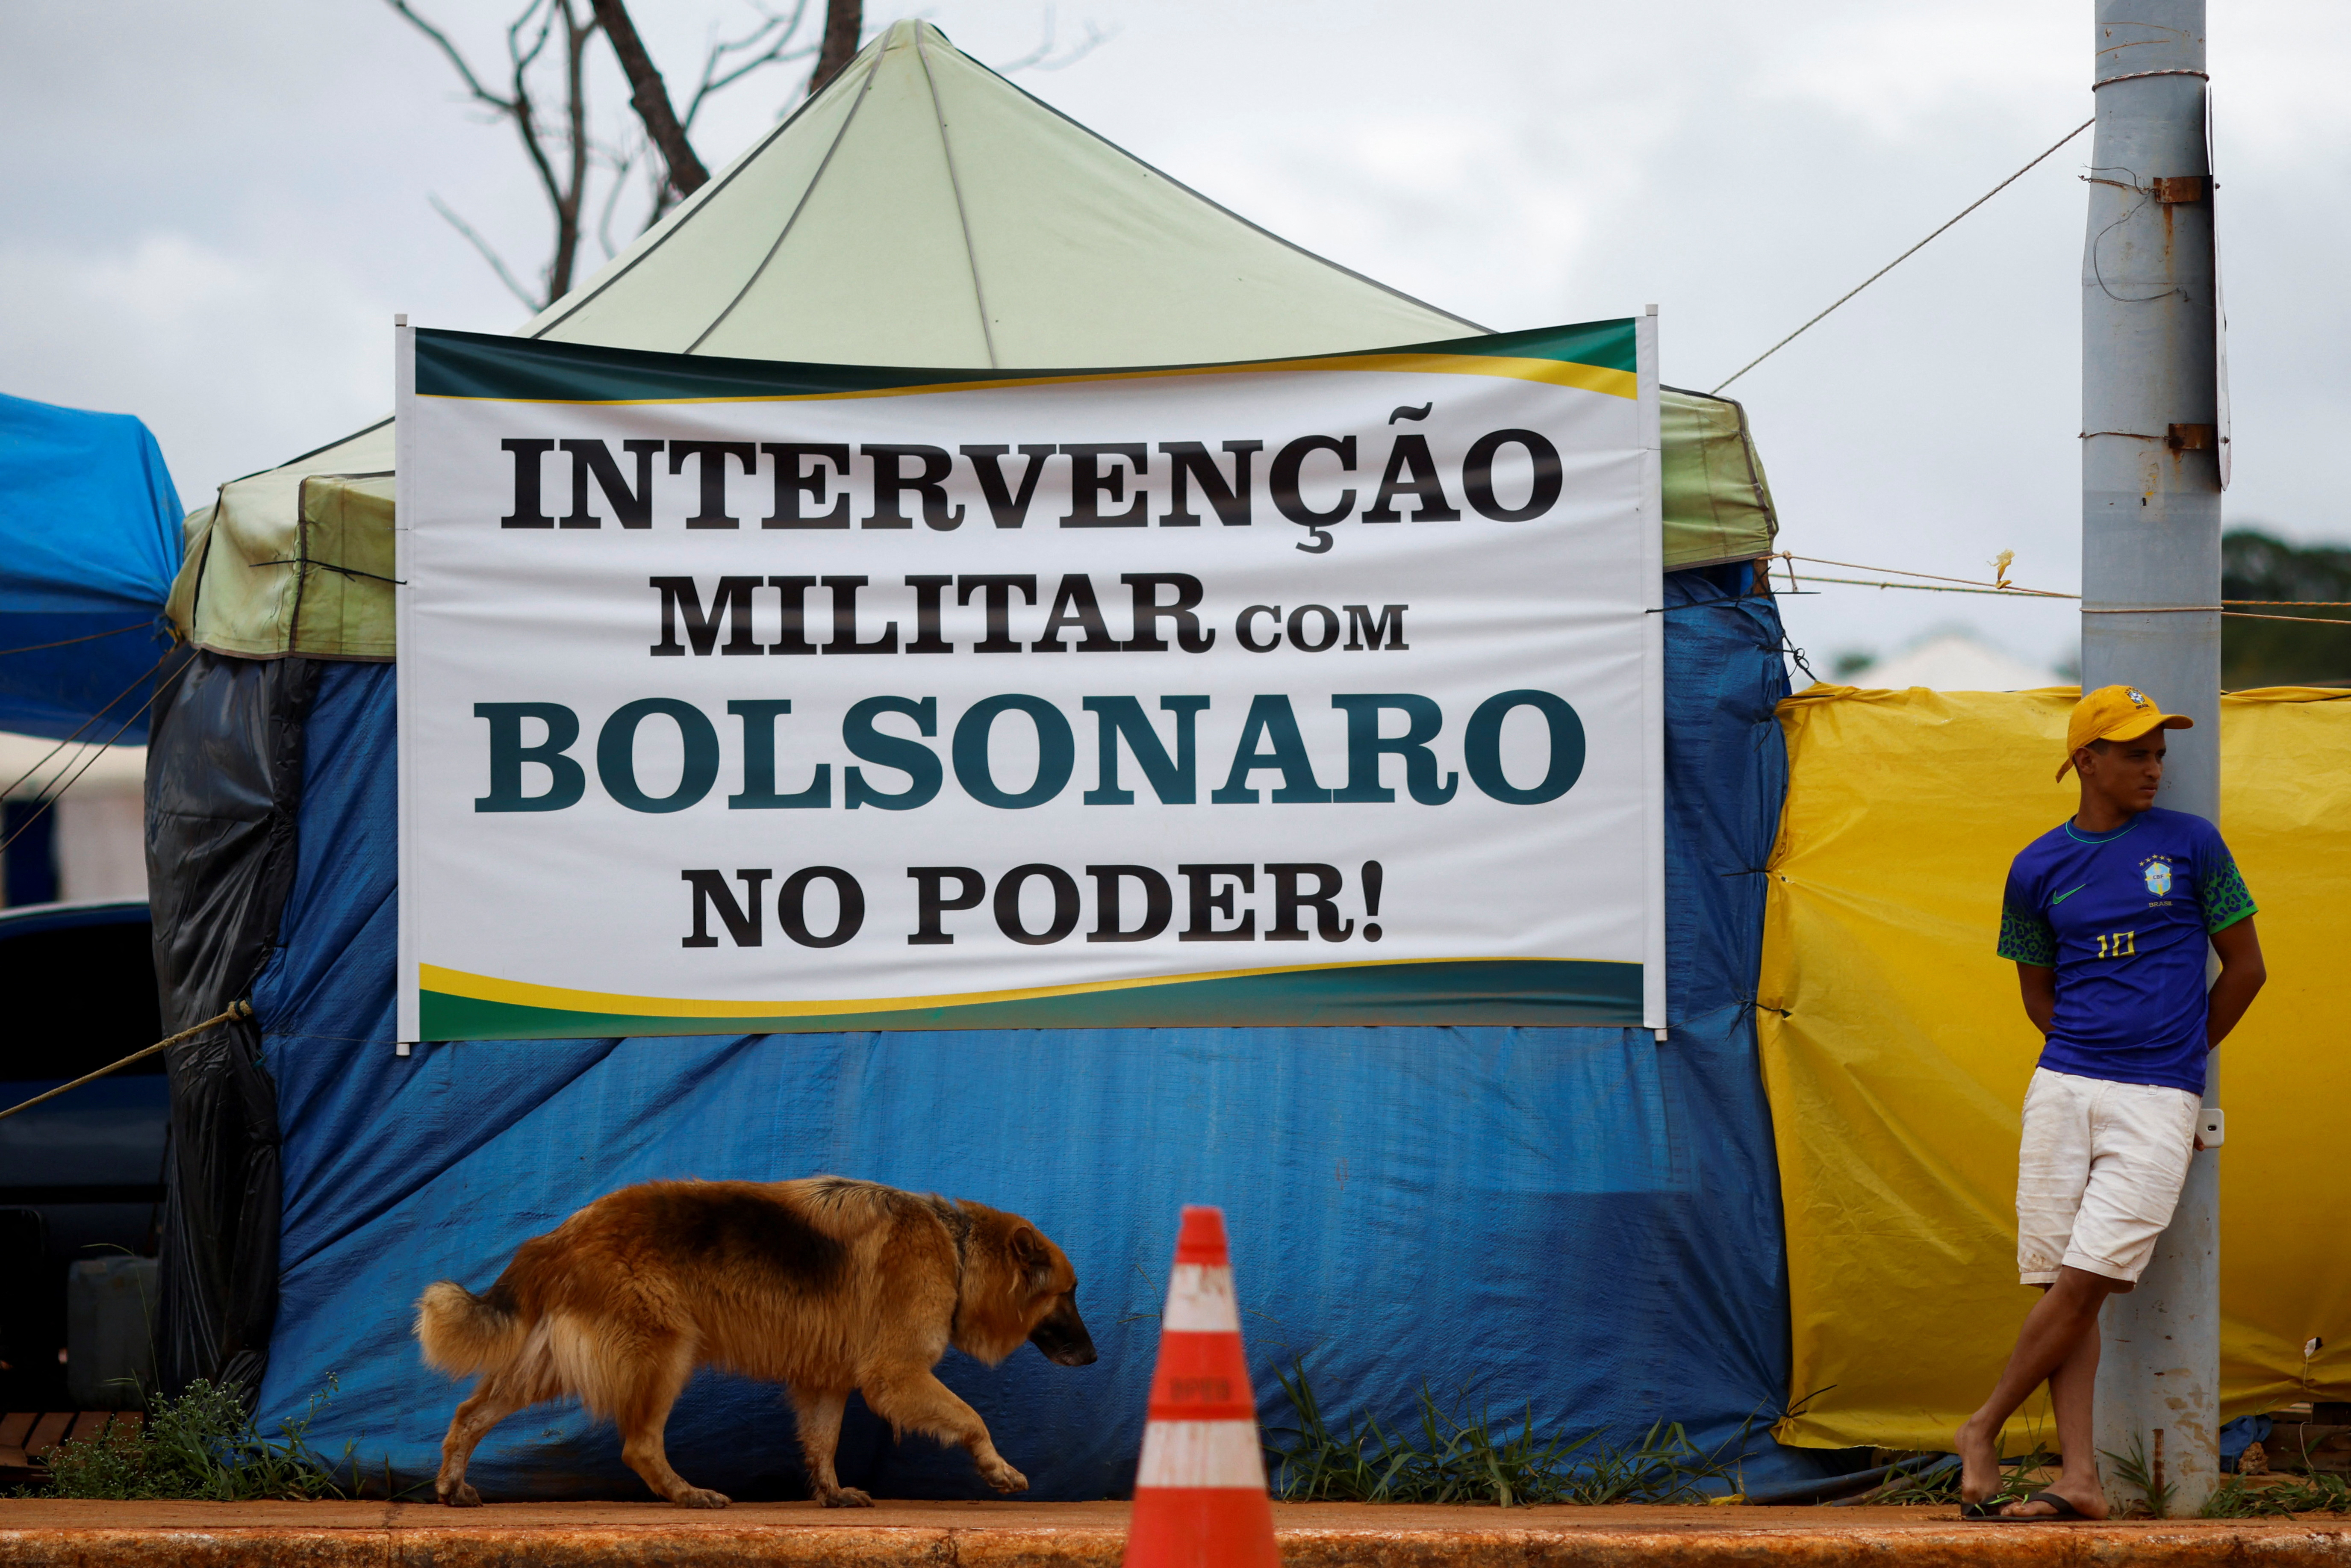 Protest held by supporters of Brazil's President Bolsonaro against President-elect Luiz Inacio Lula da Silva, at the Army Headquarters in Brasilia